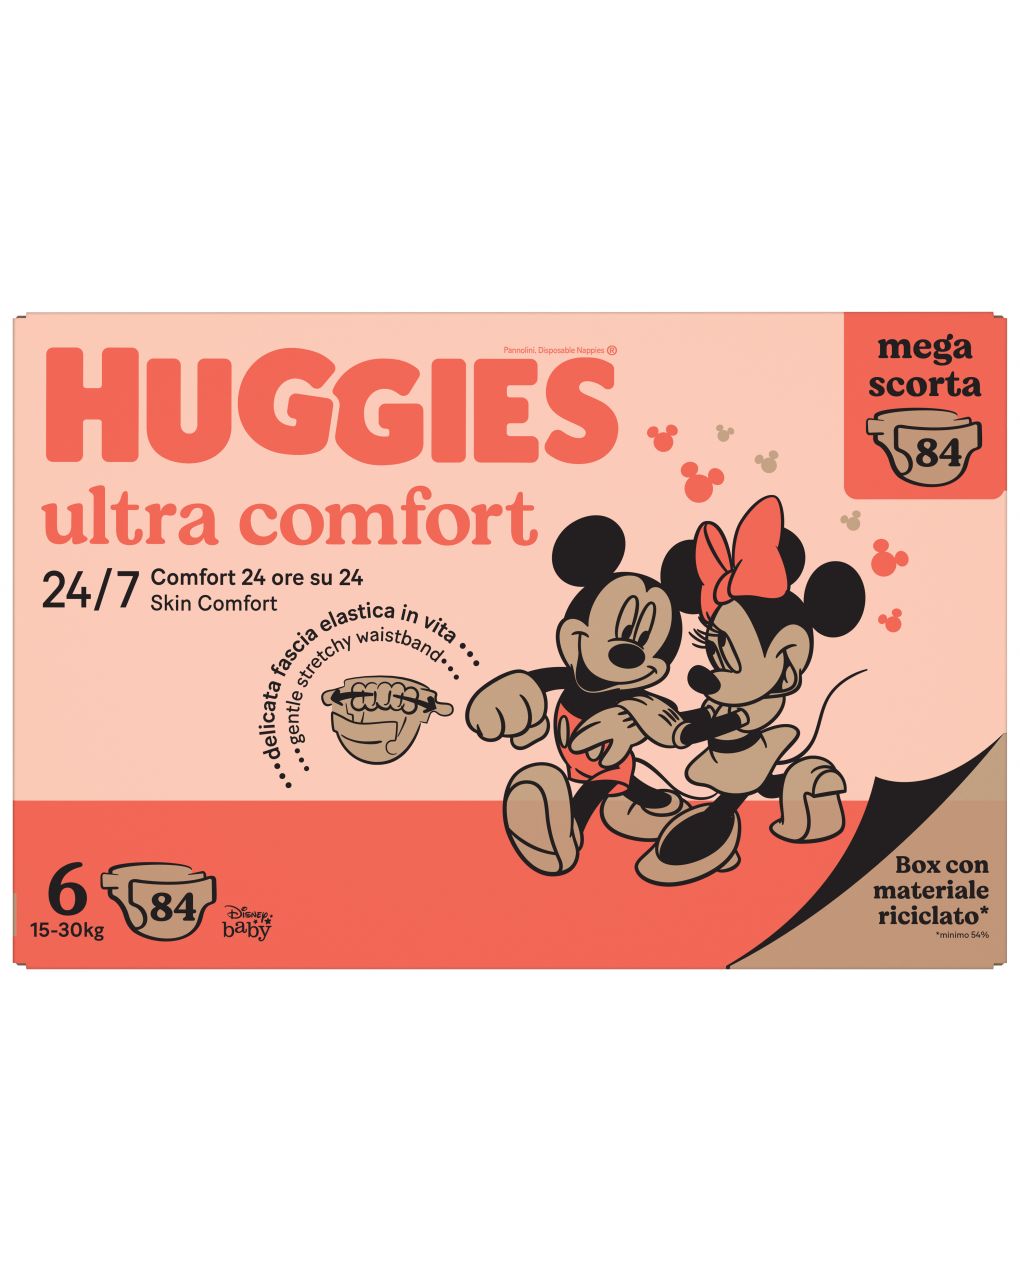 Pannolini ultra comfort megapack tg.6 - 84 pezzi - huggies - Huggies